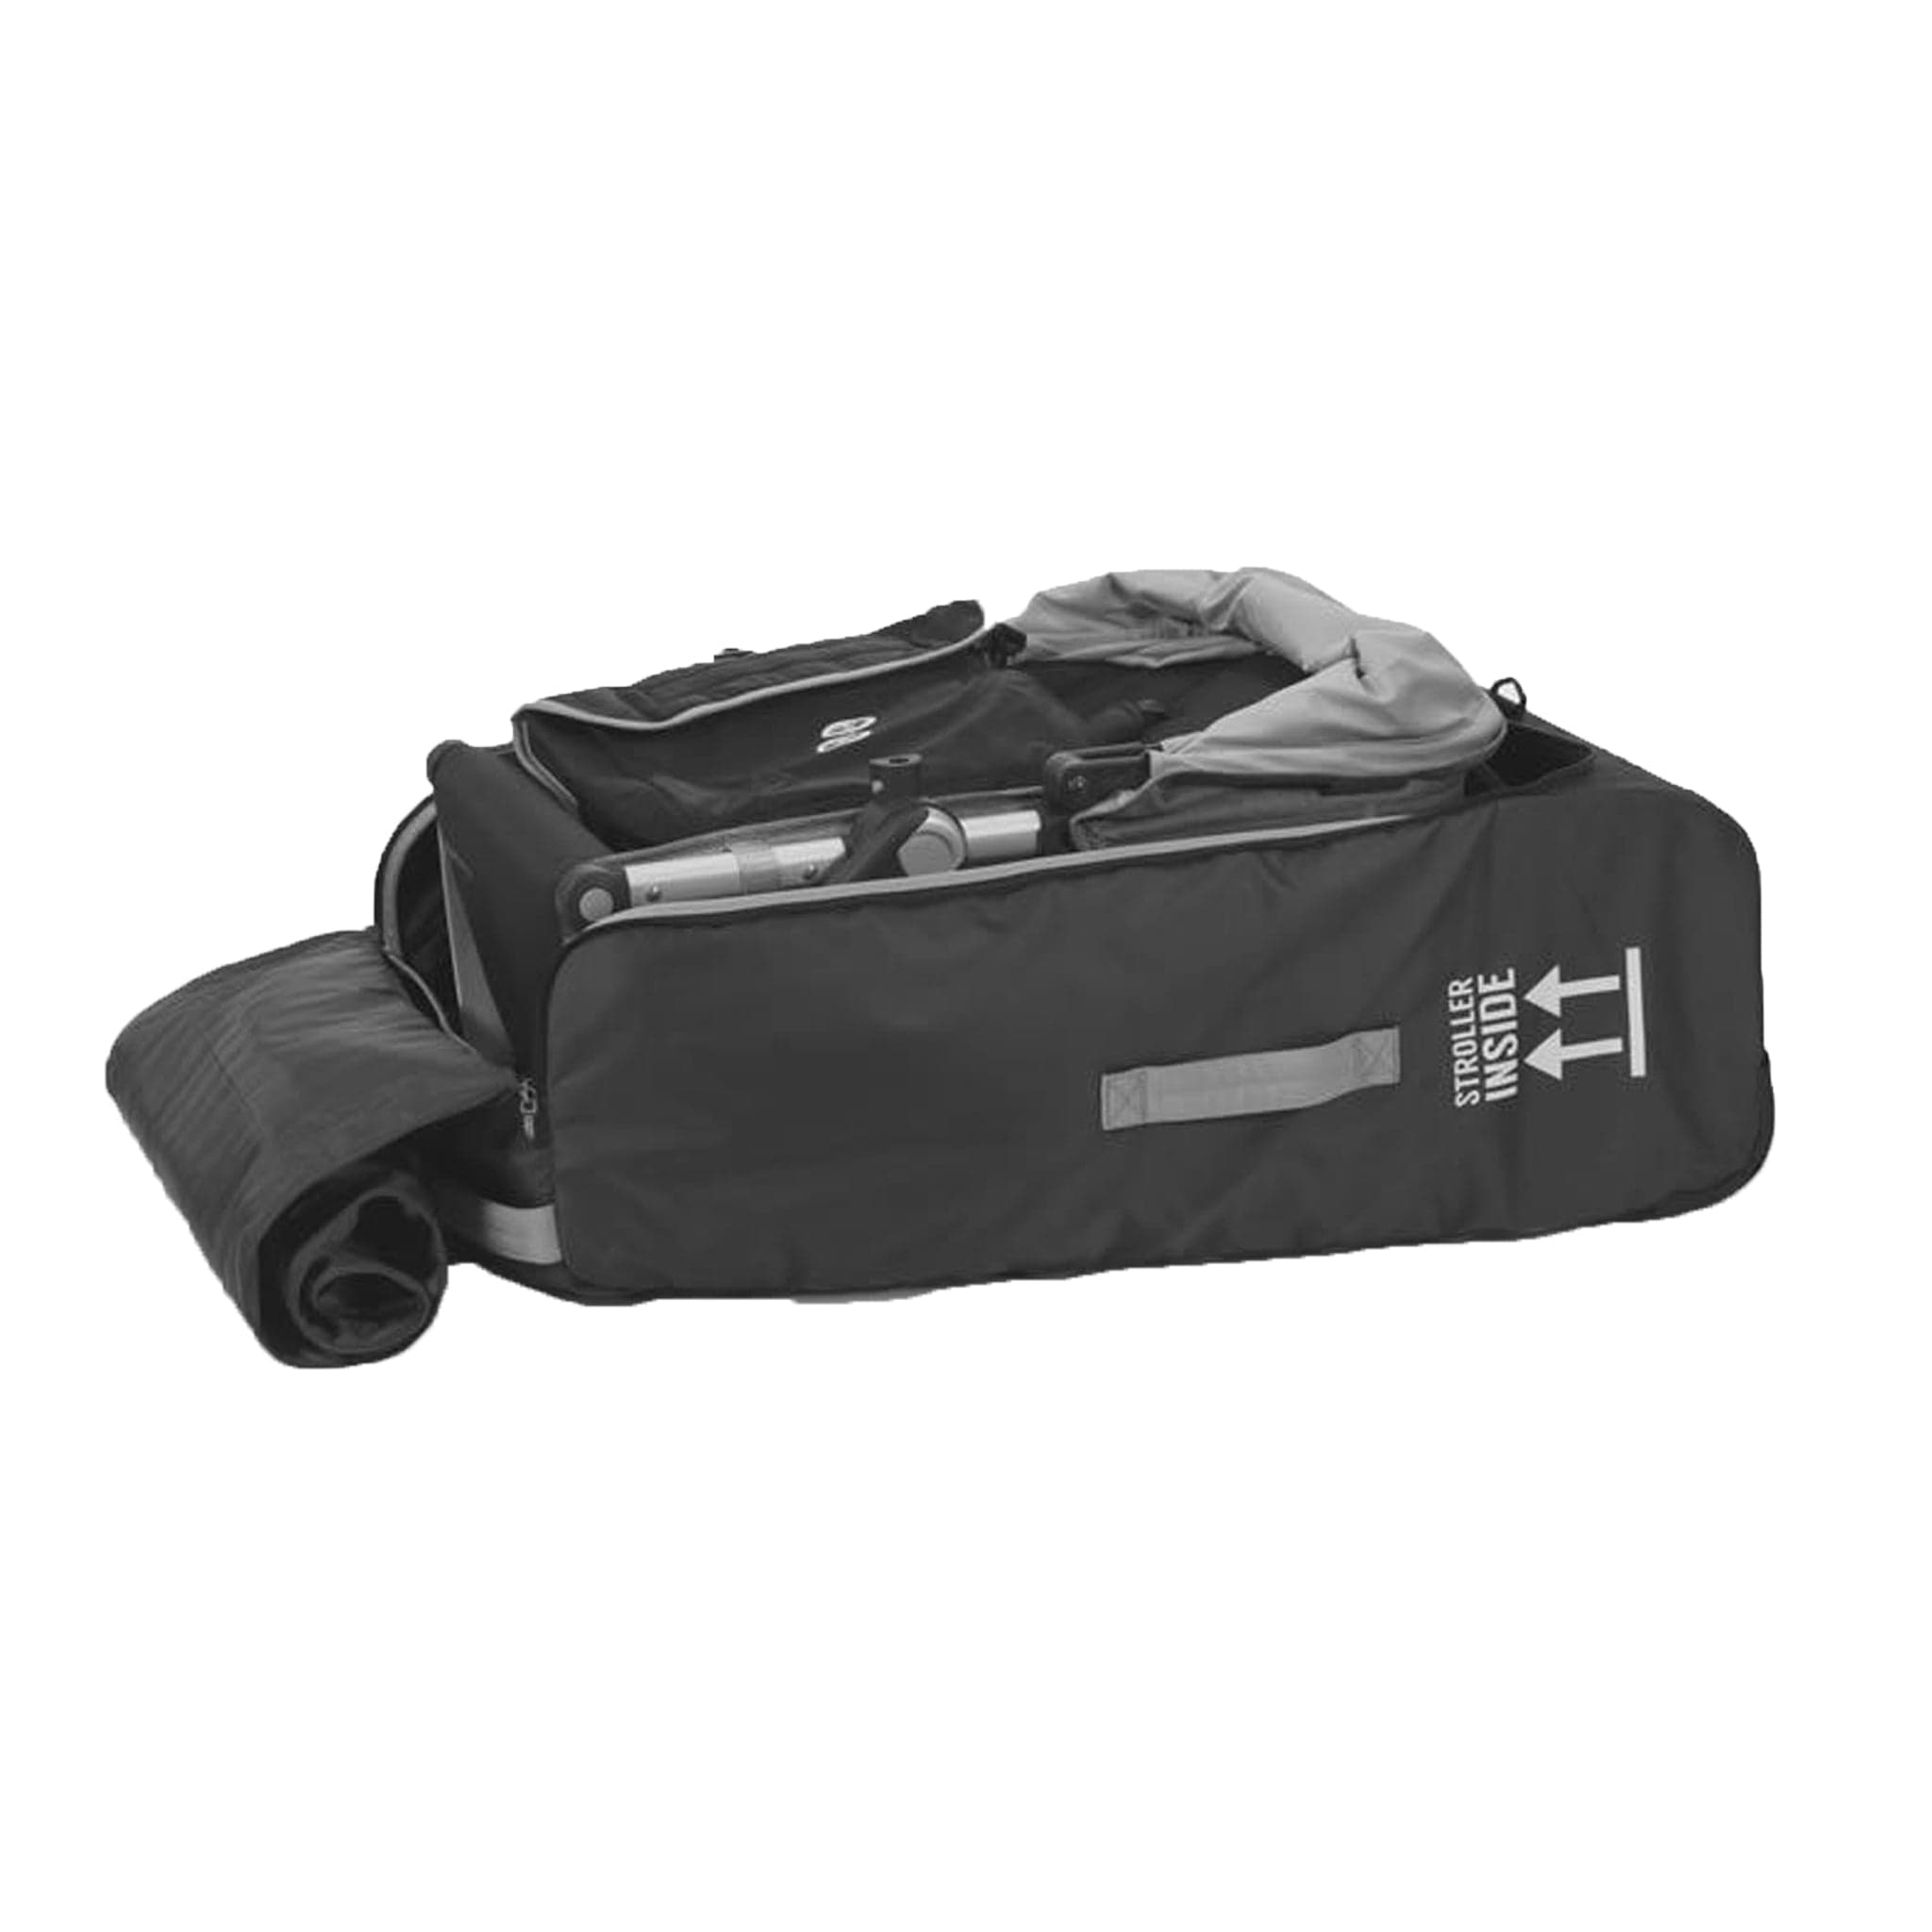 Uppababy buggy travel bags Uppababy Vista/Cruz V2 Universal Travel Bag 0920-stb-ww